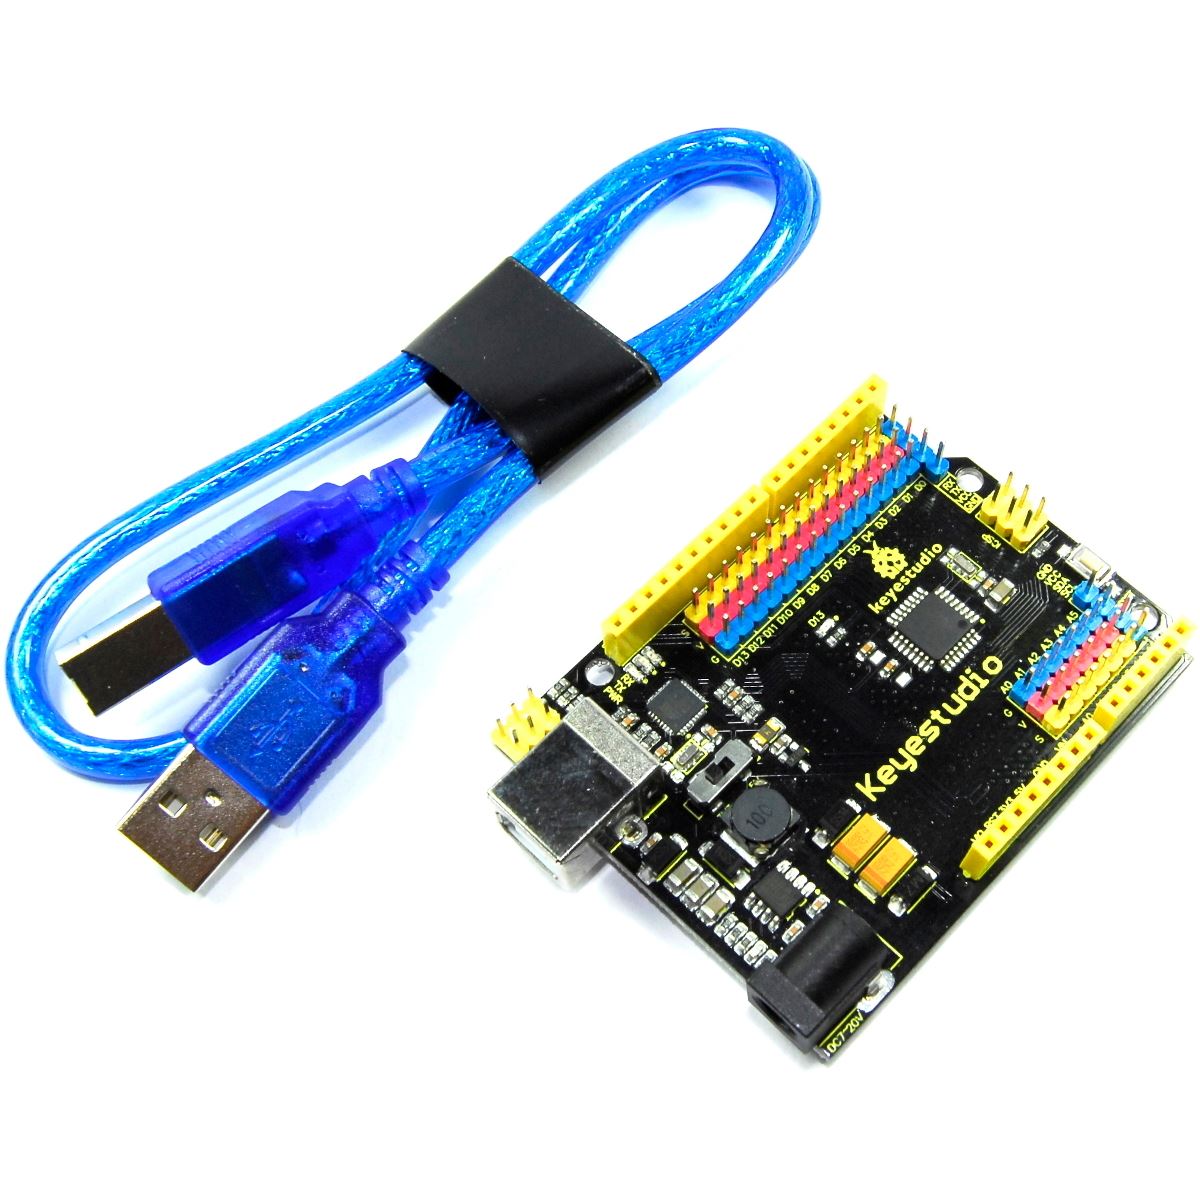  KEYESTUDIO Leonardo R3 Microcontroller Development Board with  USB Cable Kit for Arduino Project : Electronics